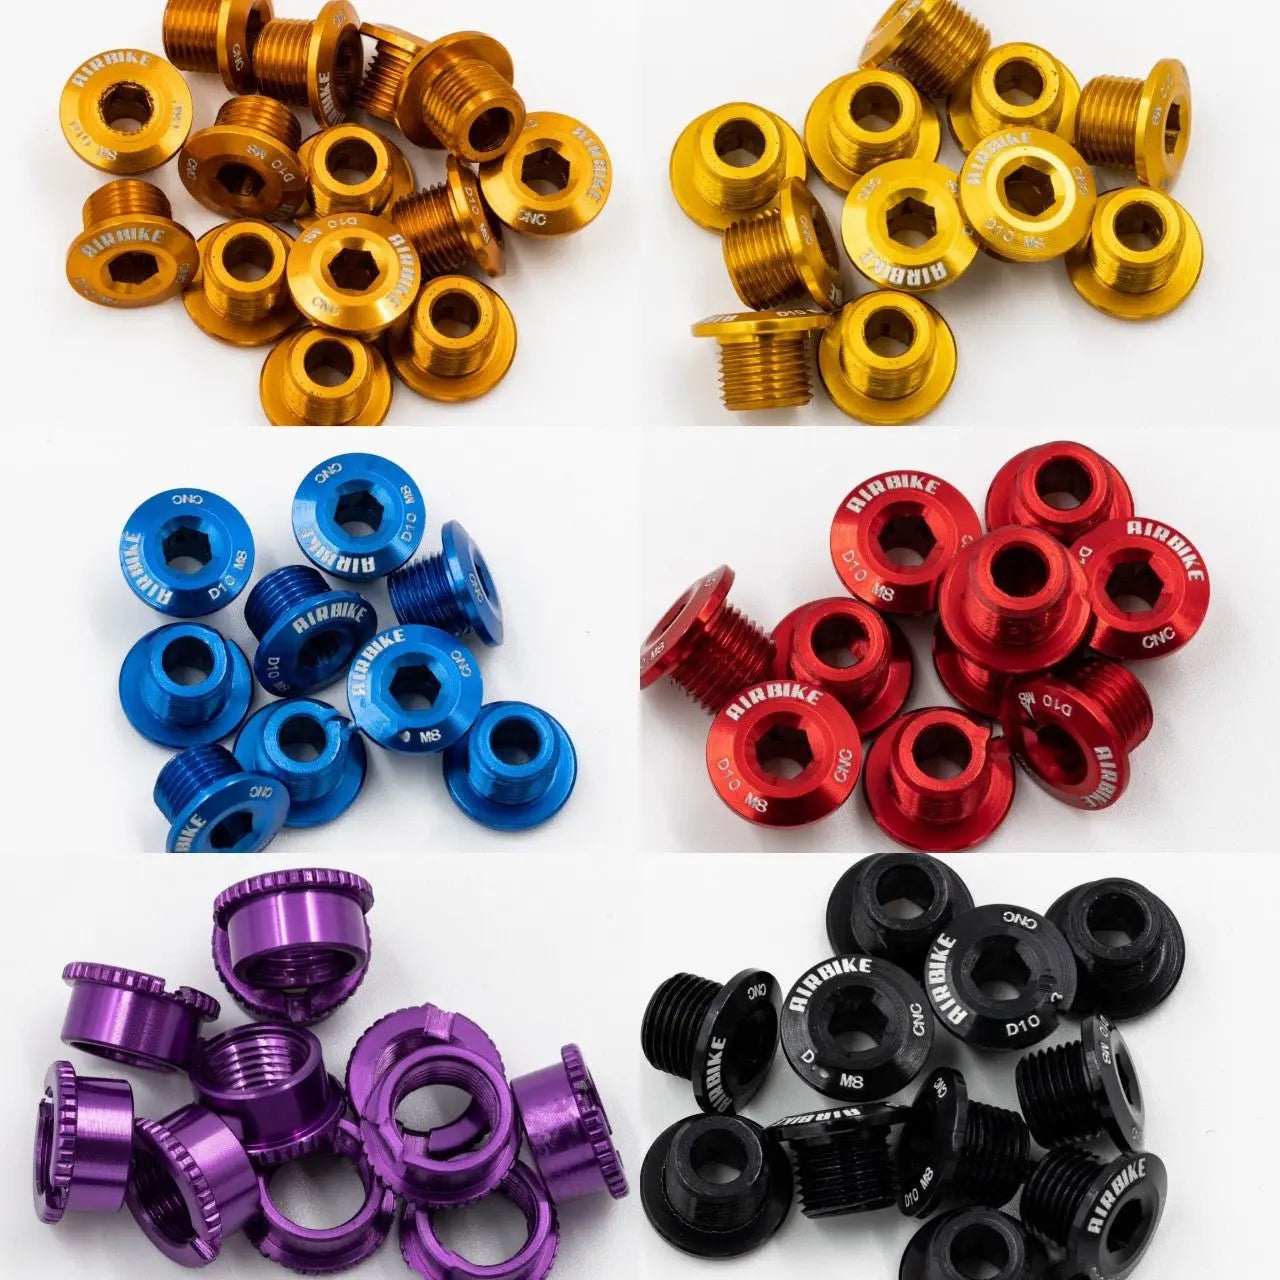 CNC Chainring Bolts - Single Speed Chain Rings - Black, Red, Green, Purple, Blue, Orange, Gold Air Bike UK - Air BikeChain Ring Bolts